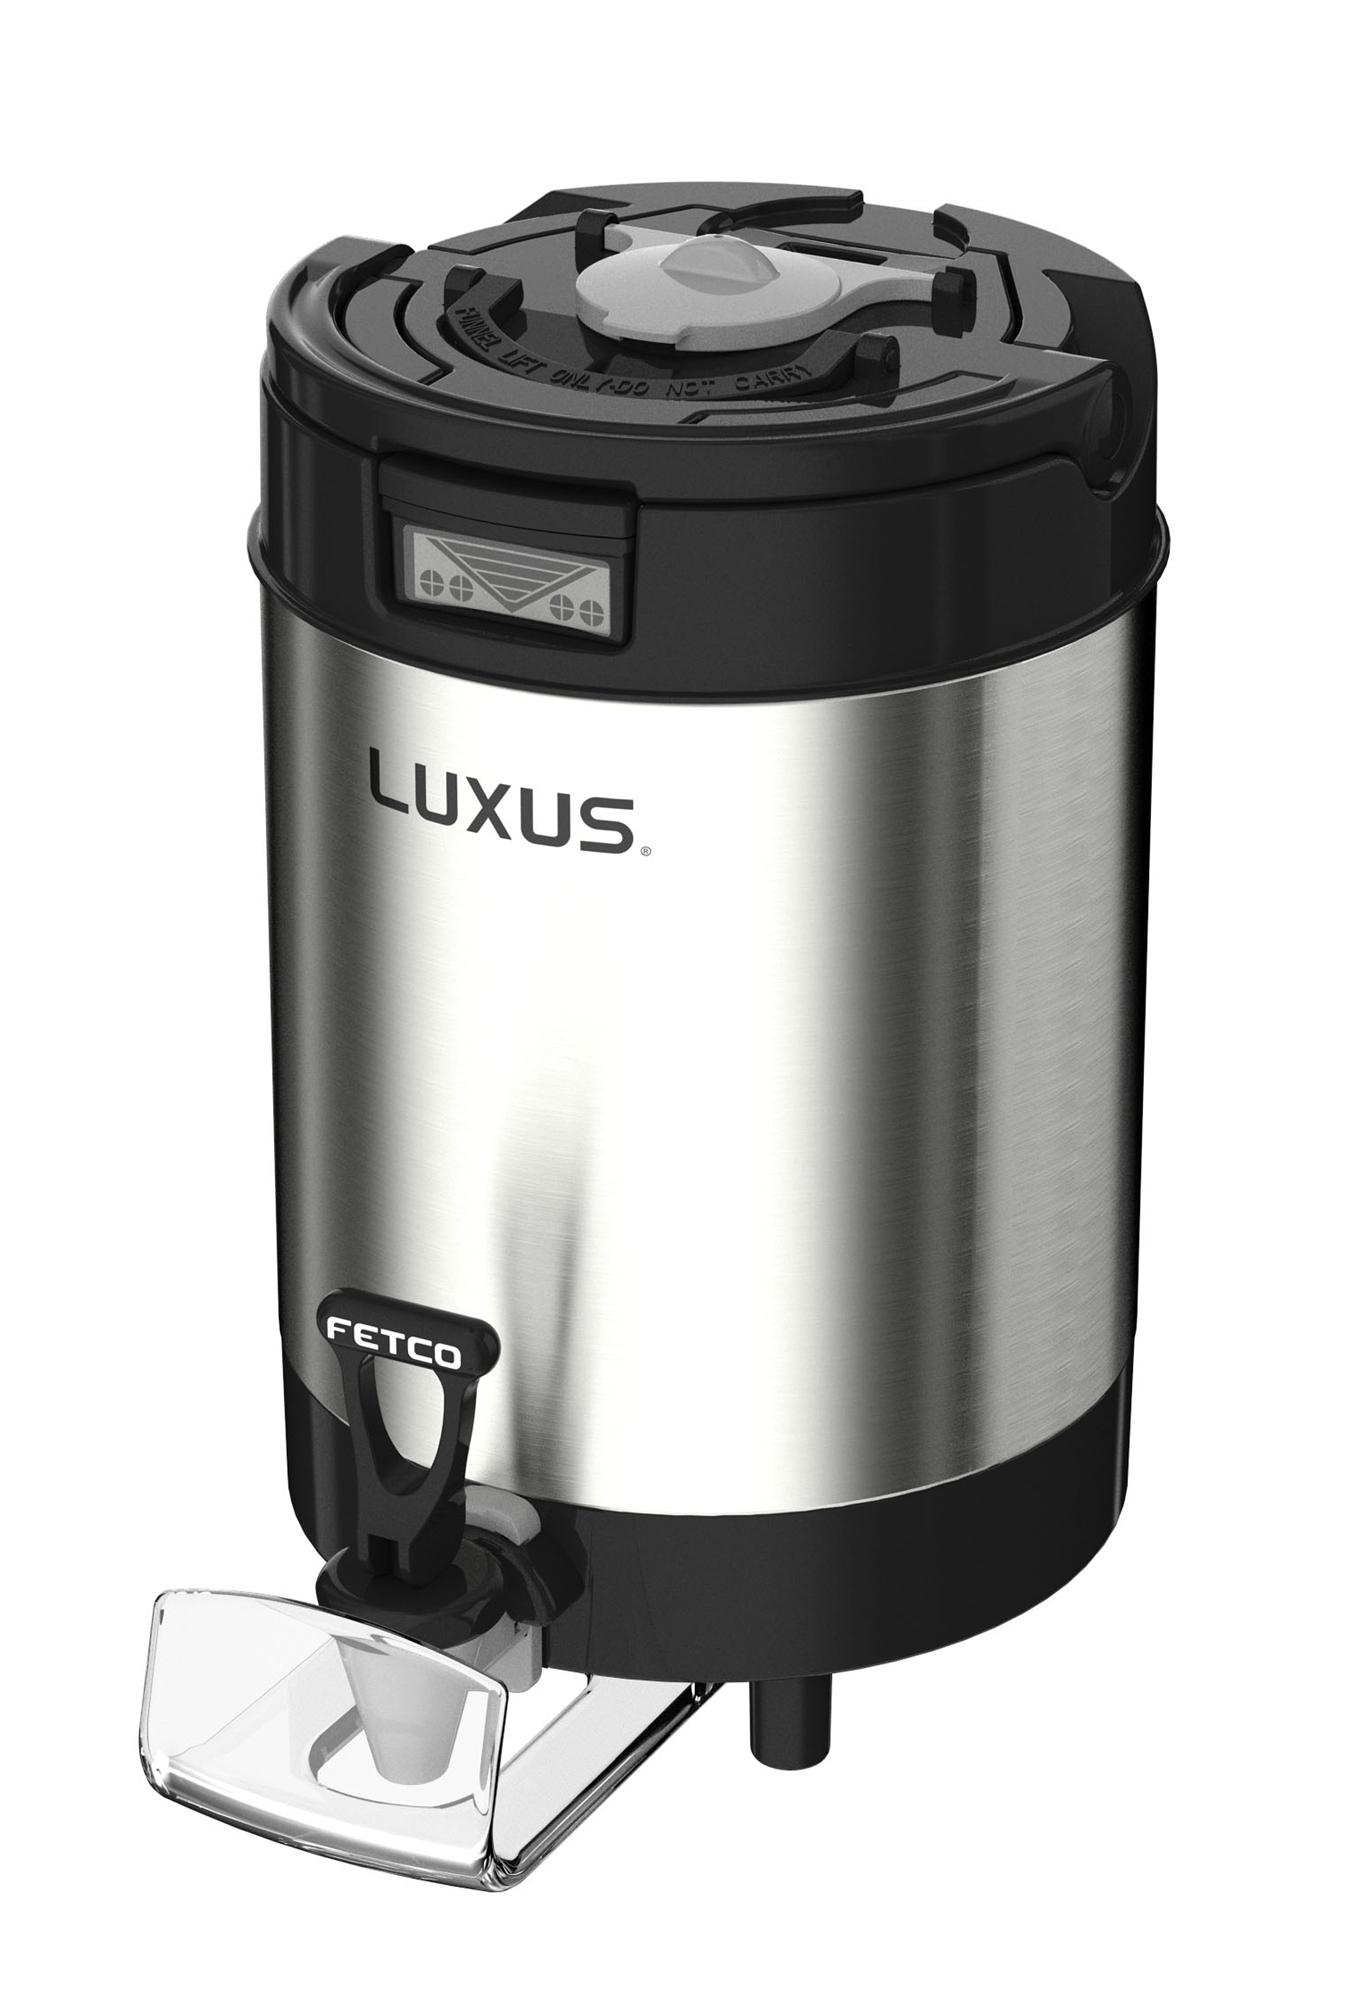 Fetco L4S-10TLA 1.0 Gallon LUXUS Touchless Thermal Dispenser